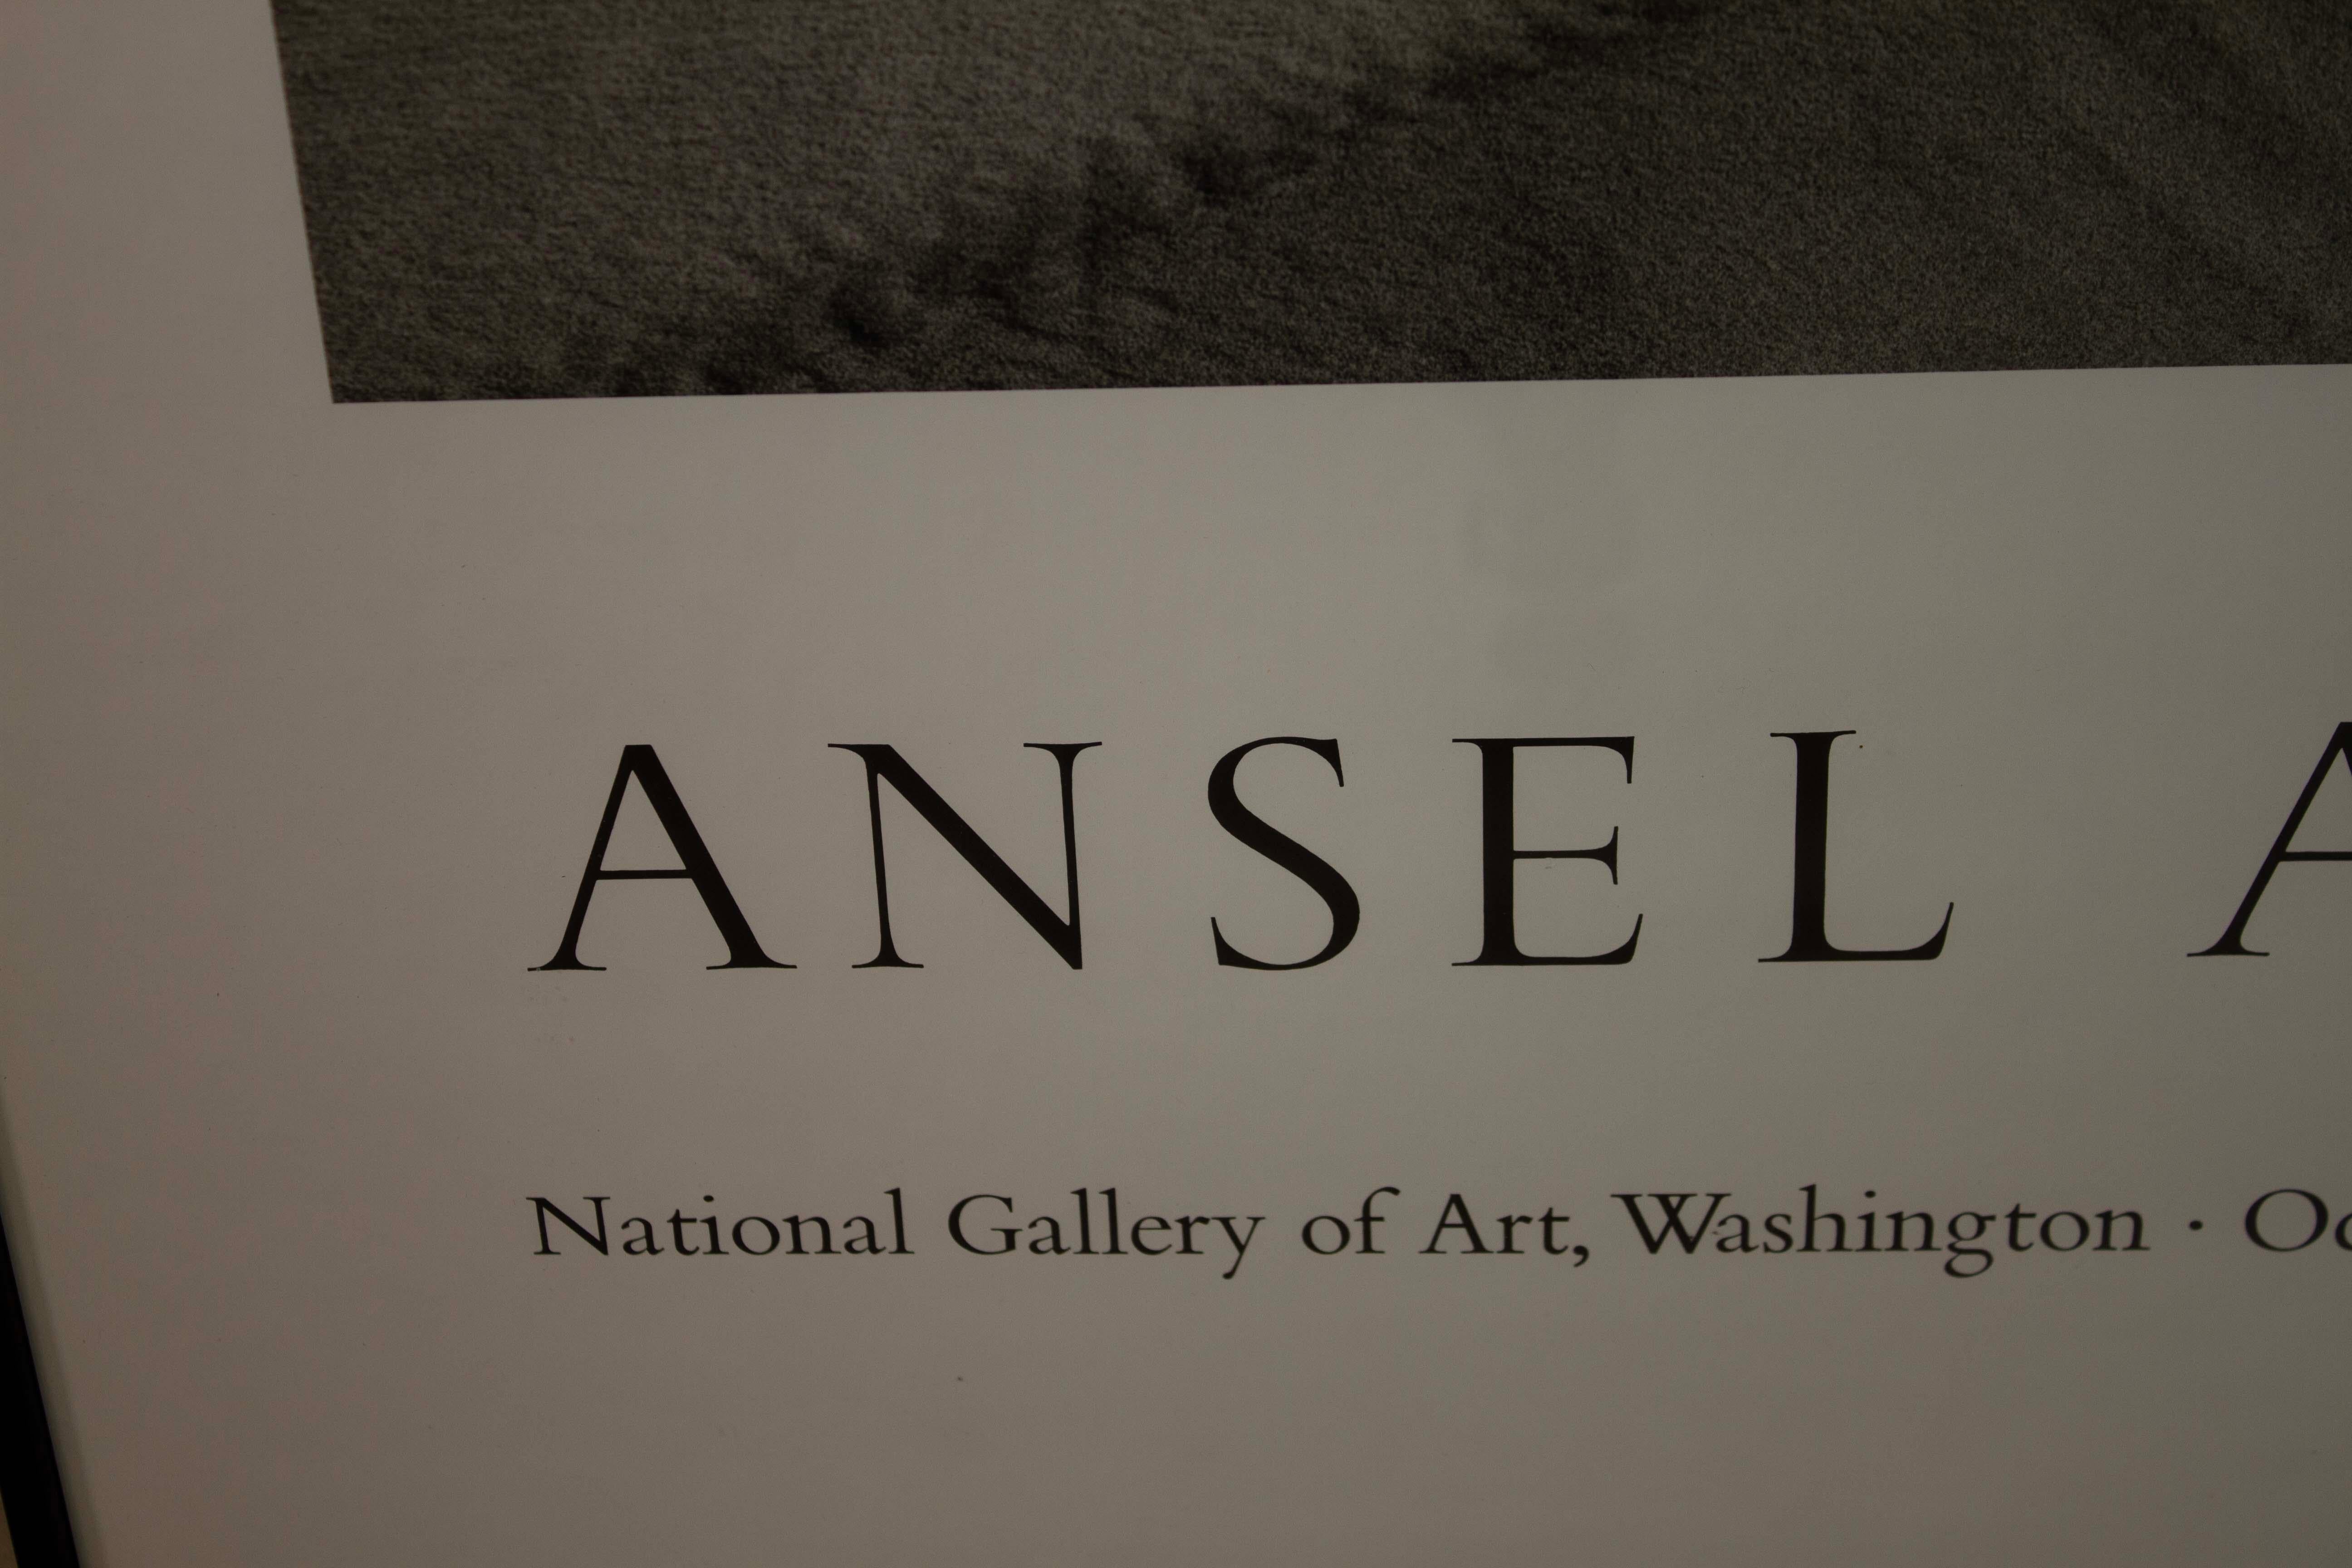 Ansel Adams Vintage National Gallery of Art 1985/86 Art Exhibition Poster Framed 1